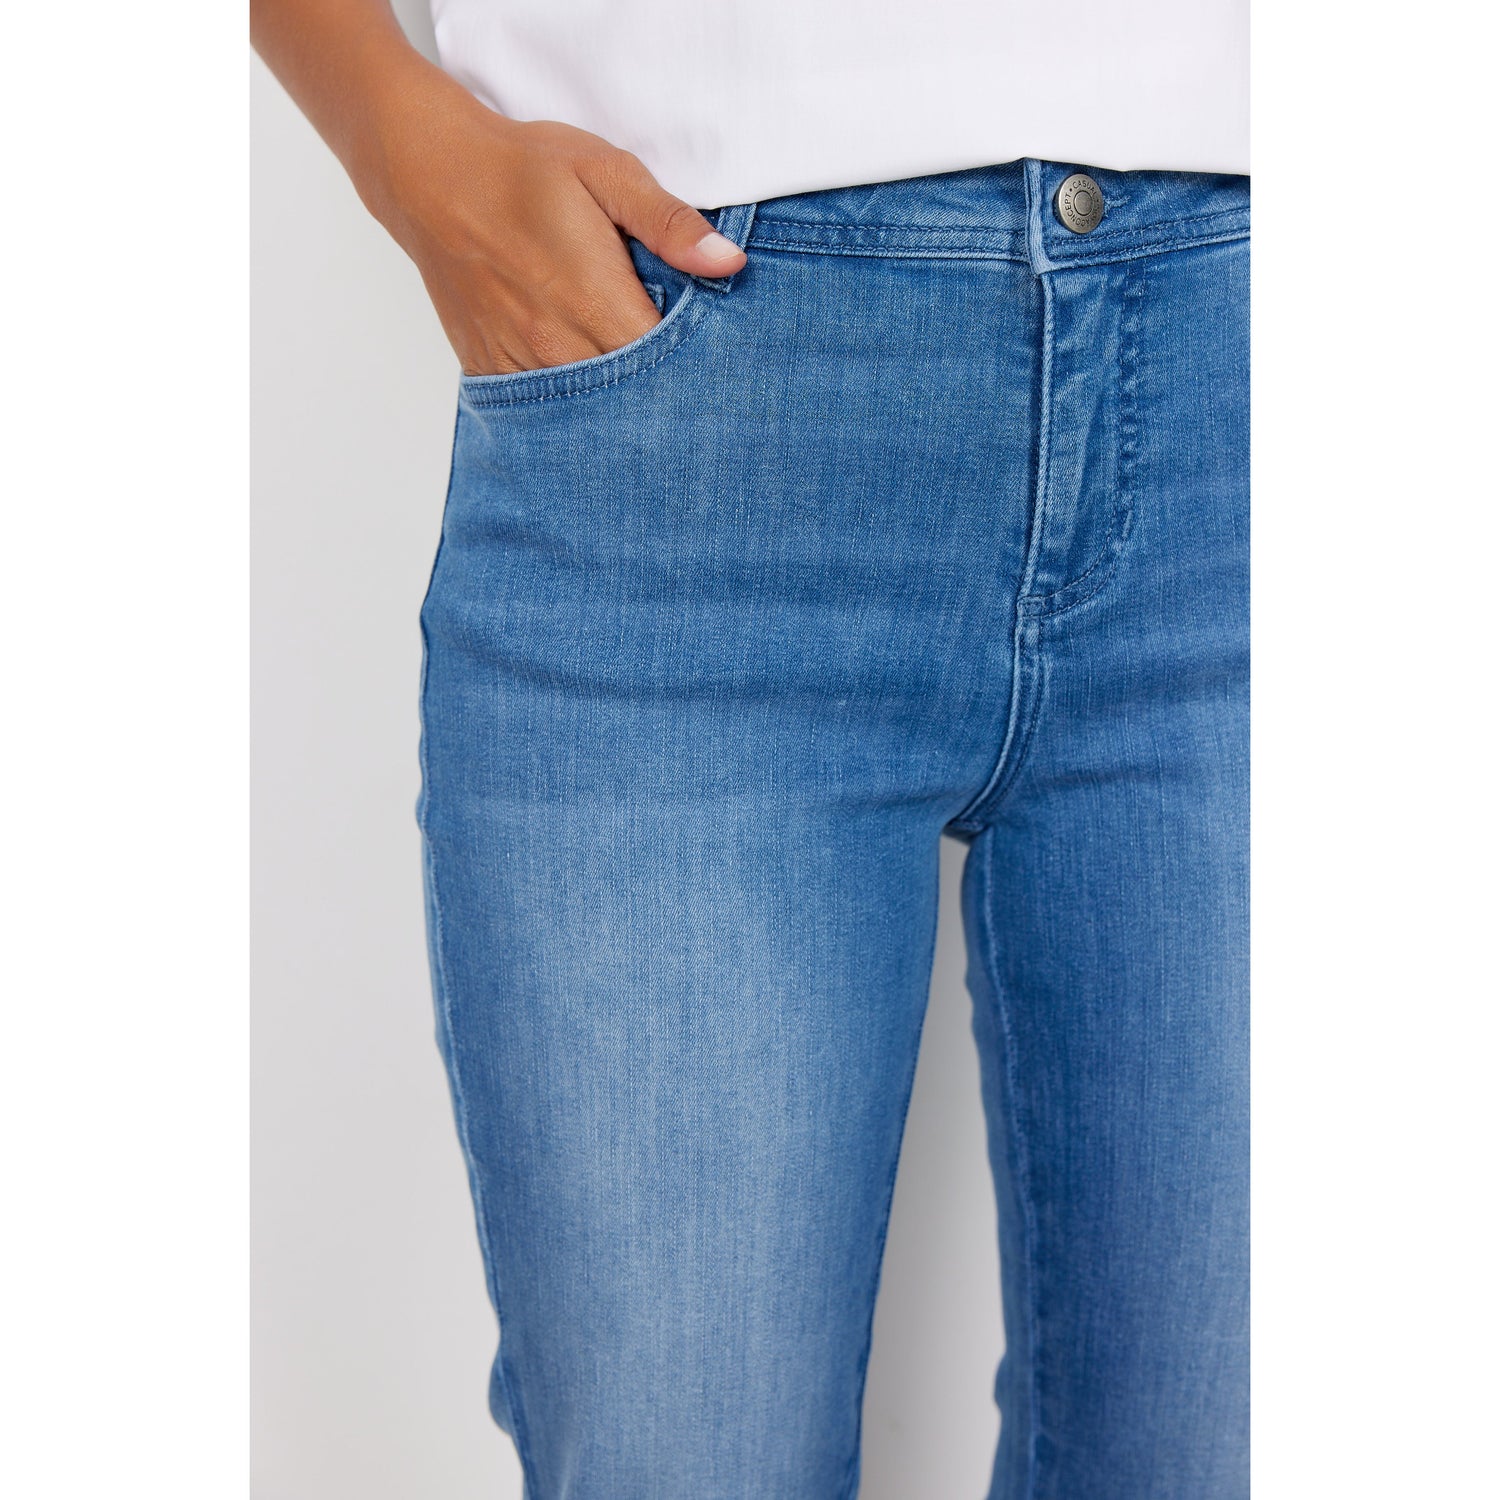 Kimberly 14 B Jeans